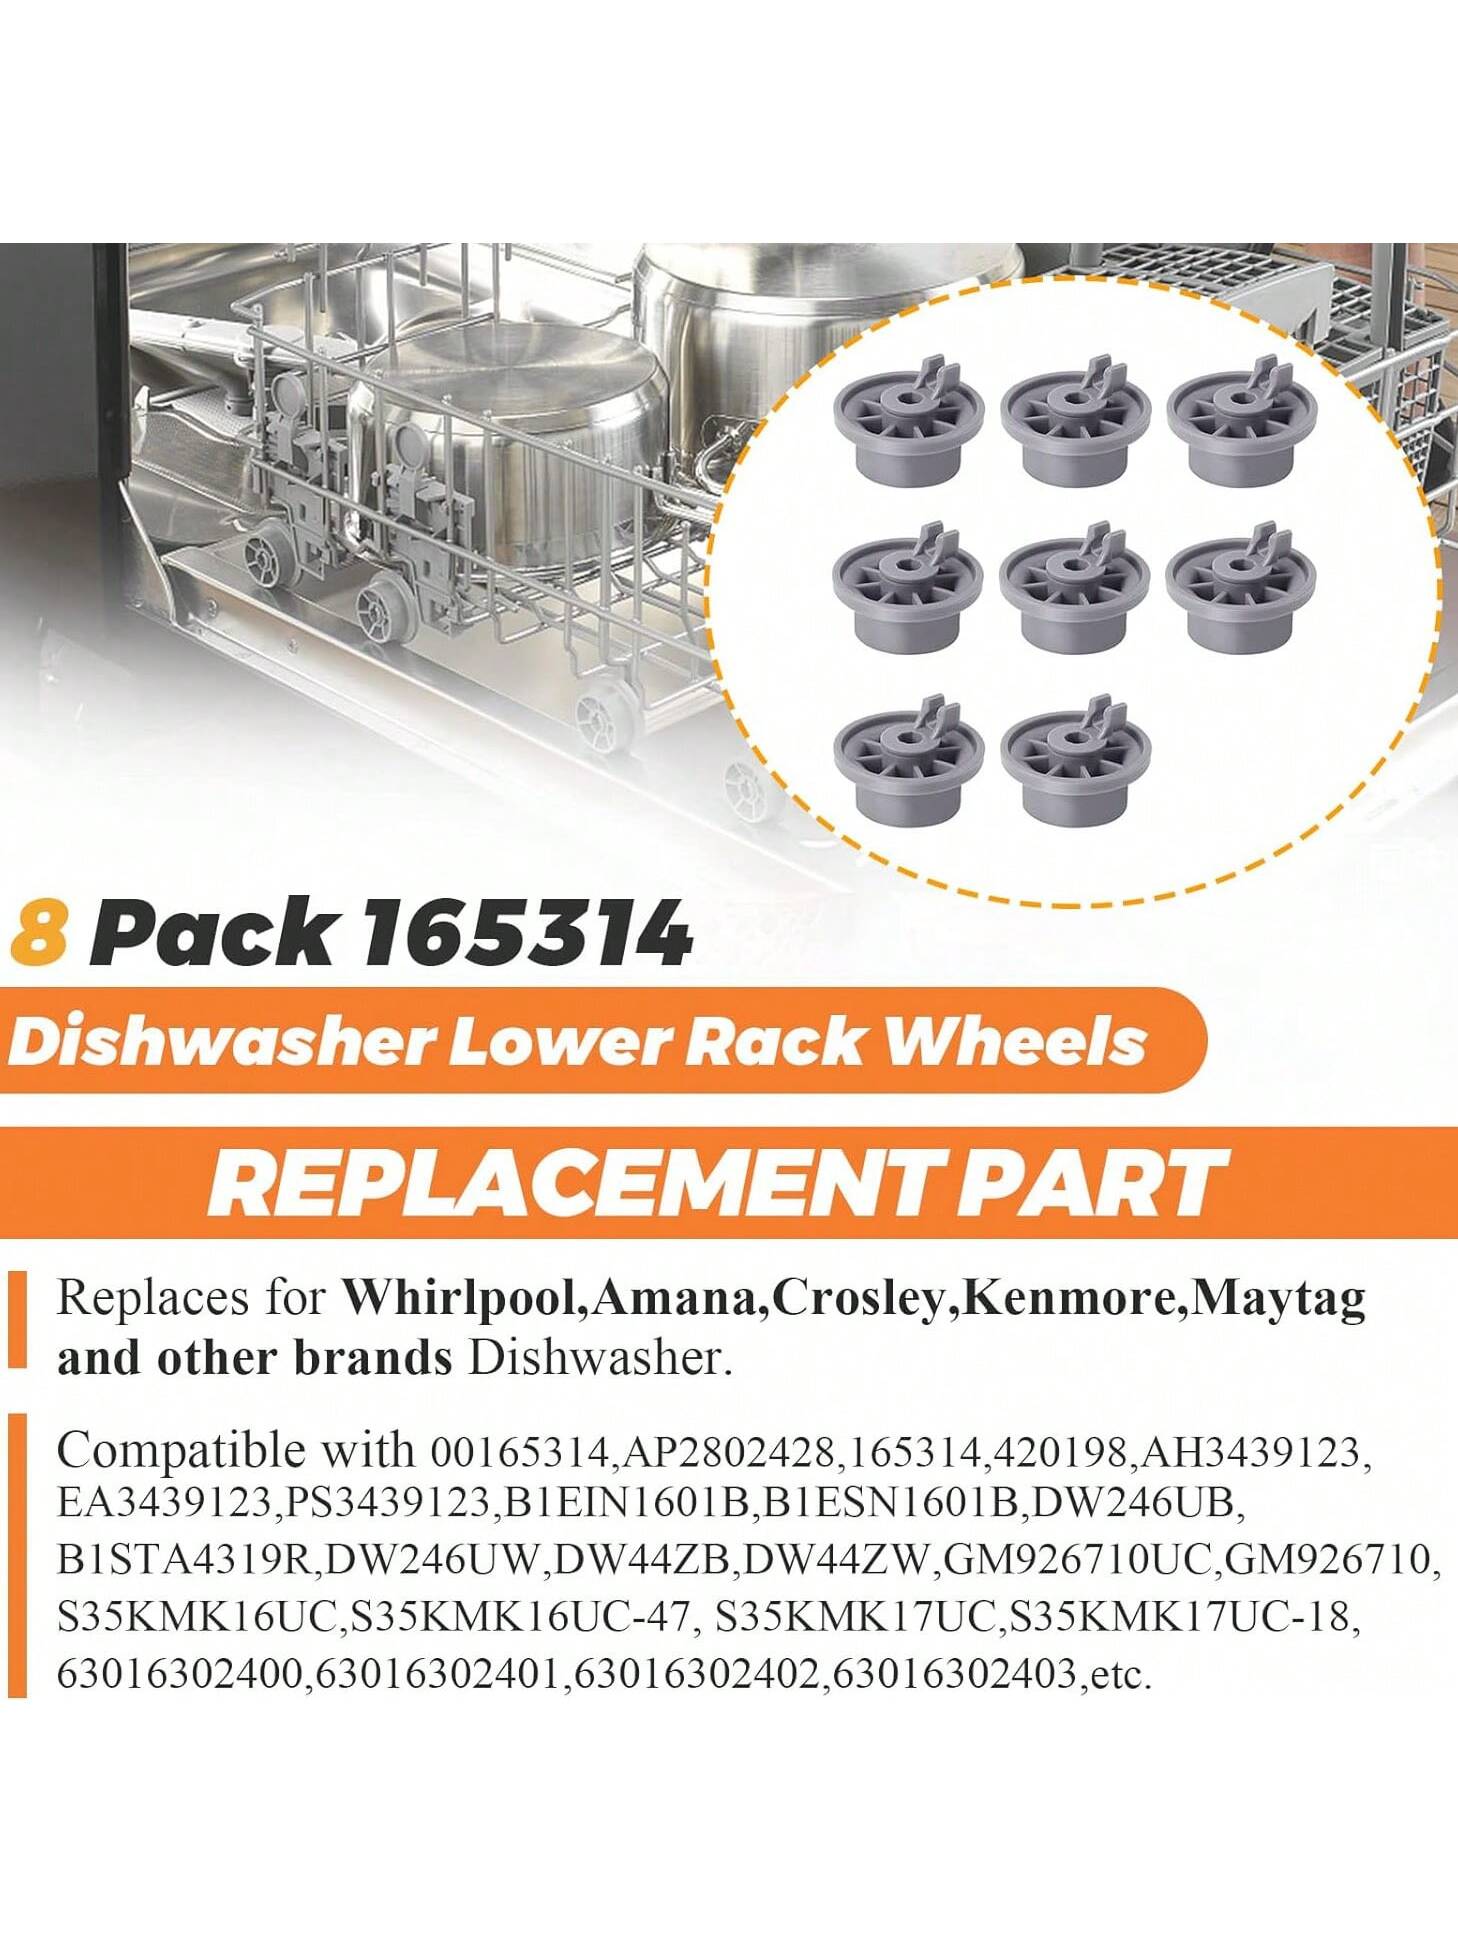 ( 8 Pack )165314 Dishwasher Lower Rack Wheels UPGRADED Fit For Bosch Kenmore Dishwasher 165314 Dishwasher Wheels Replace 420198 AP2802428 PS3439123 423232 EAP3439123 PS8697067 Dishwasher Rack Number-Grey-2